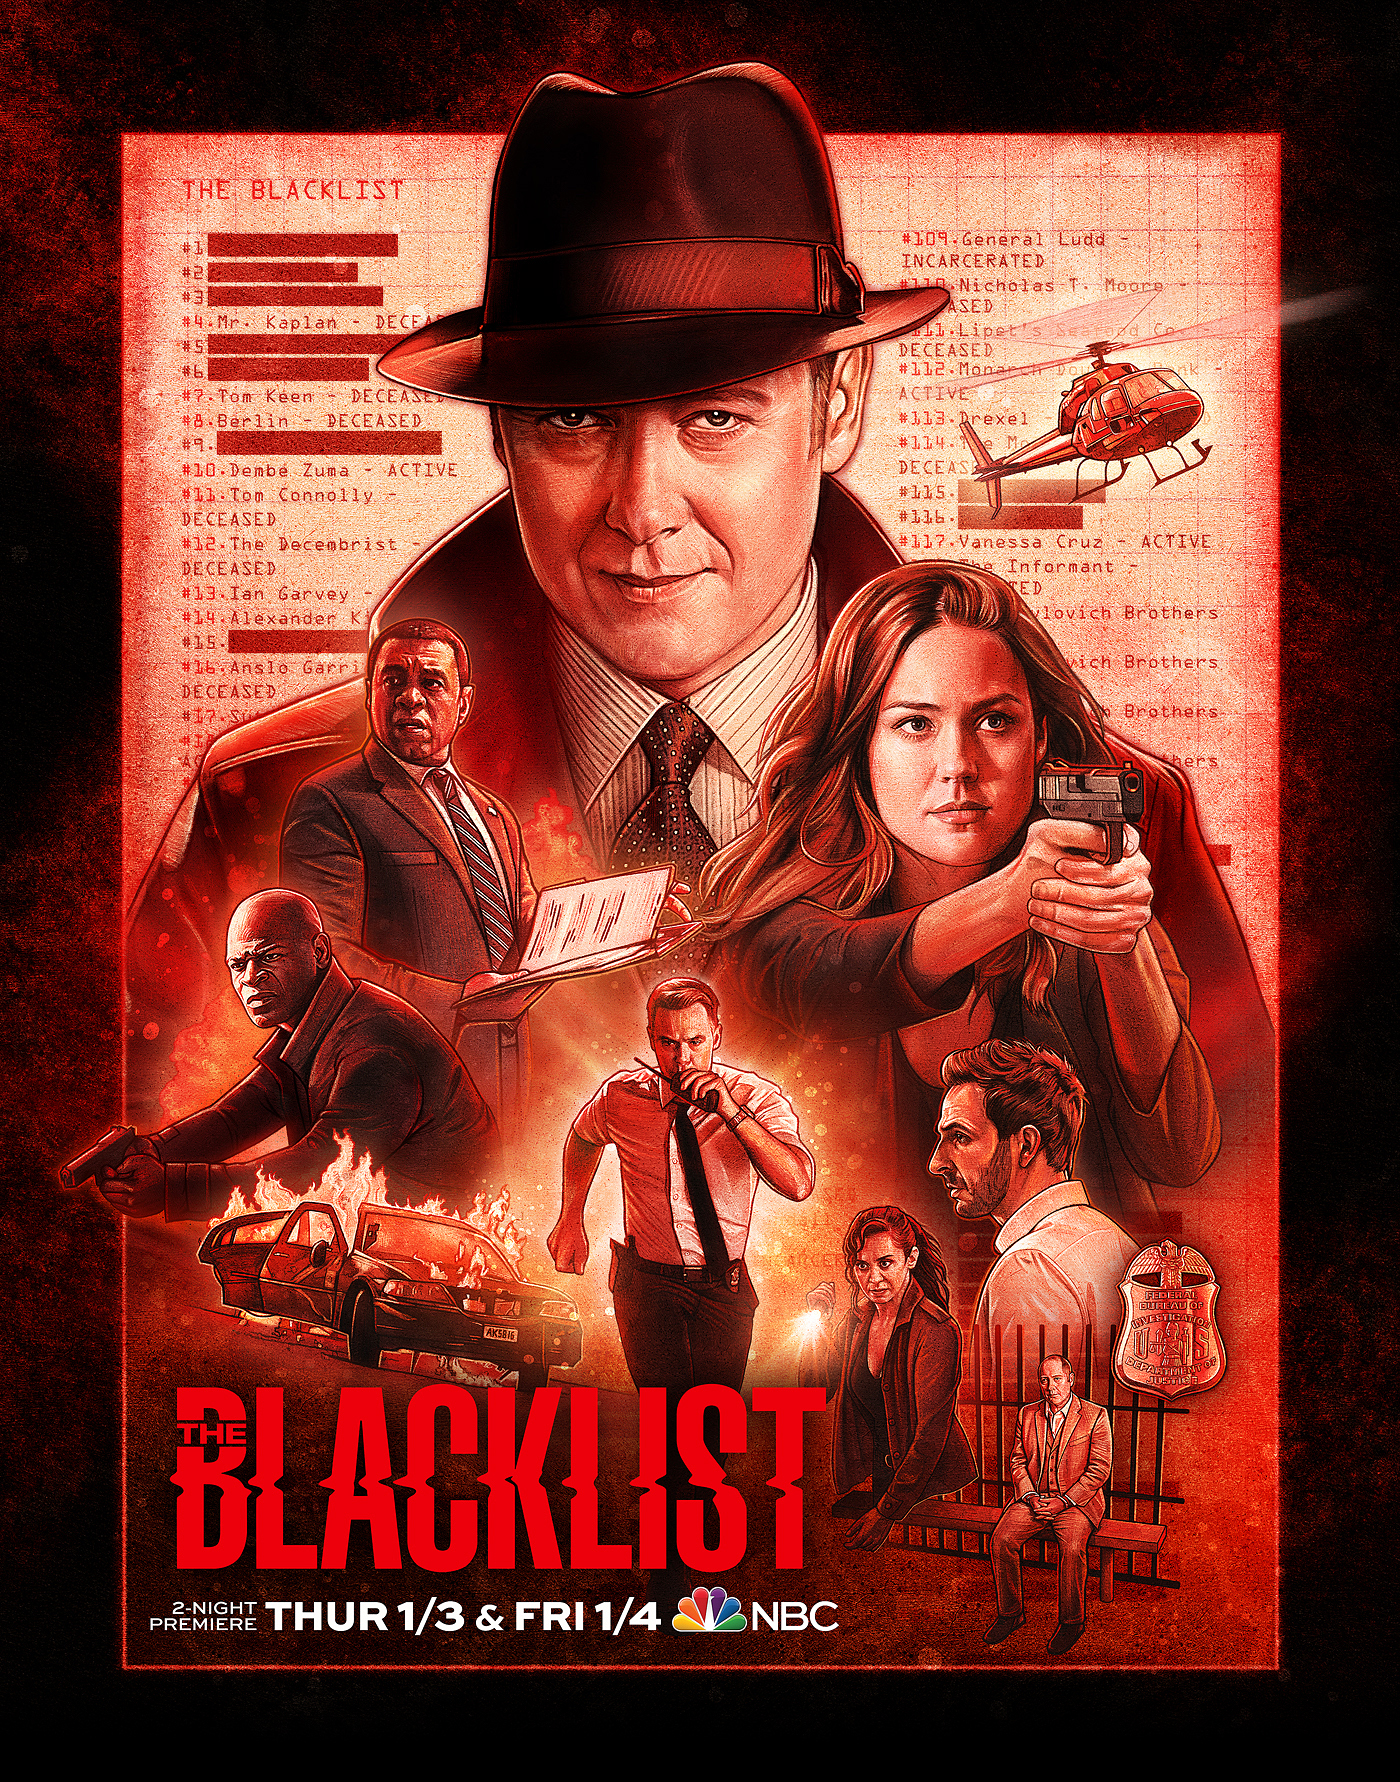 The Blacklist - Season 6 Montage Poster by Kyle Lambert